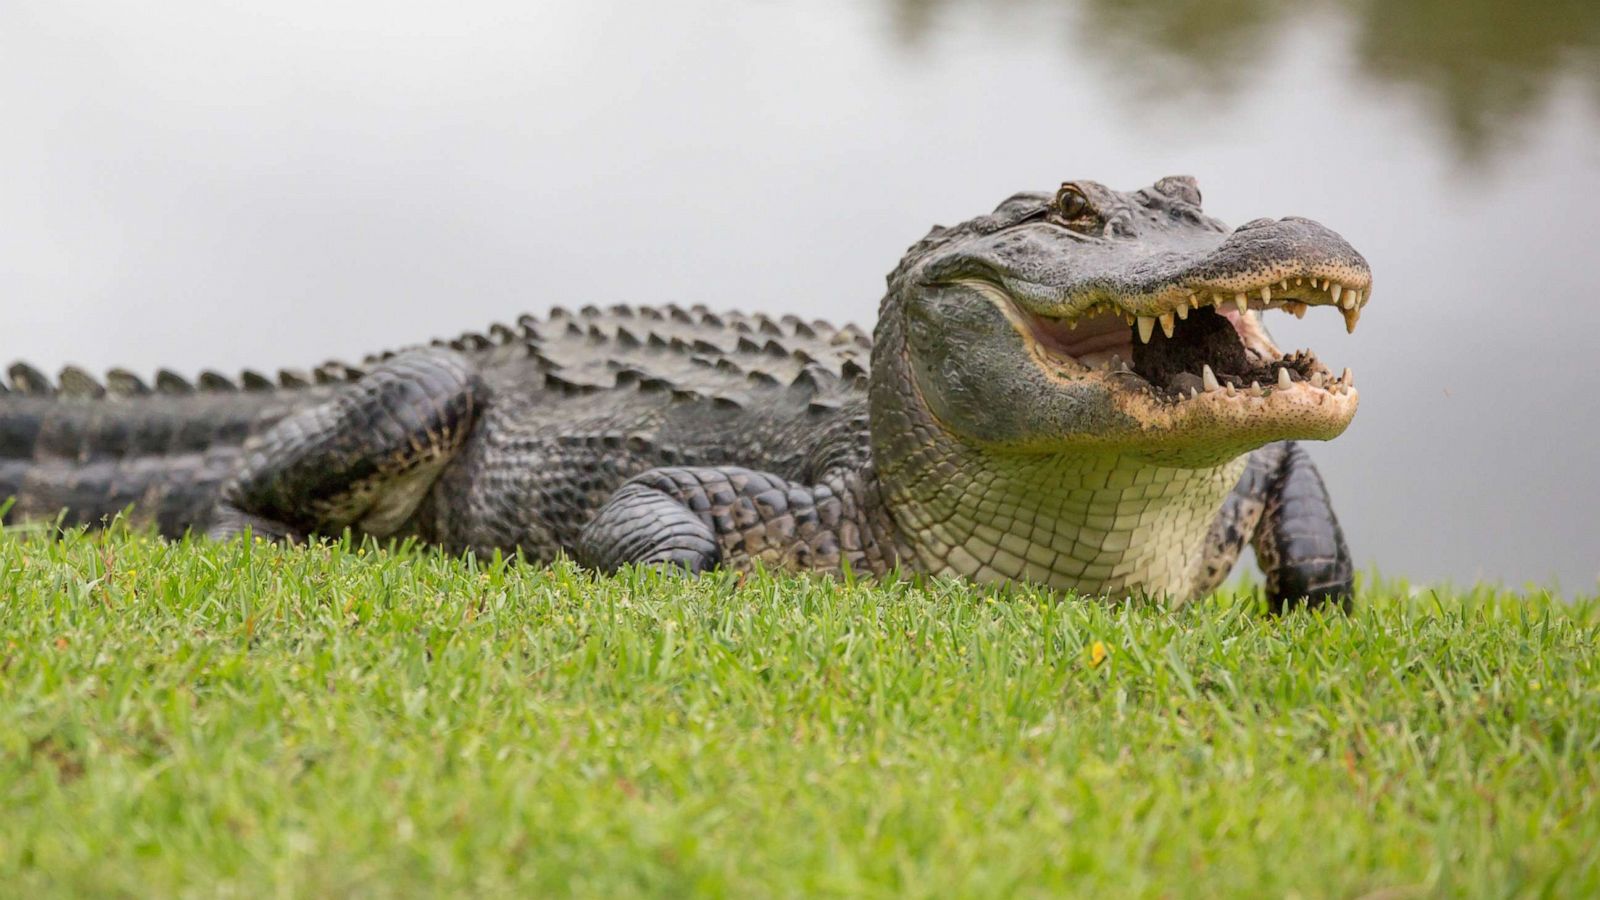 Alligator Encounter: Woman's Close Call With A Gator In South Carolina Neighborhood